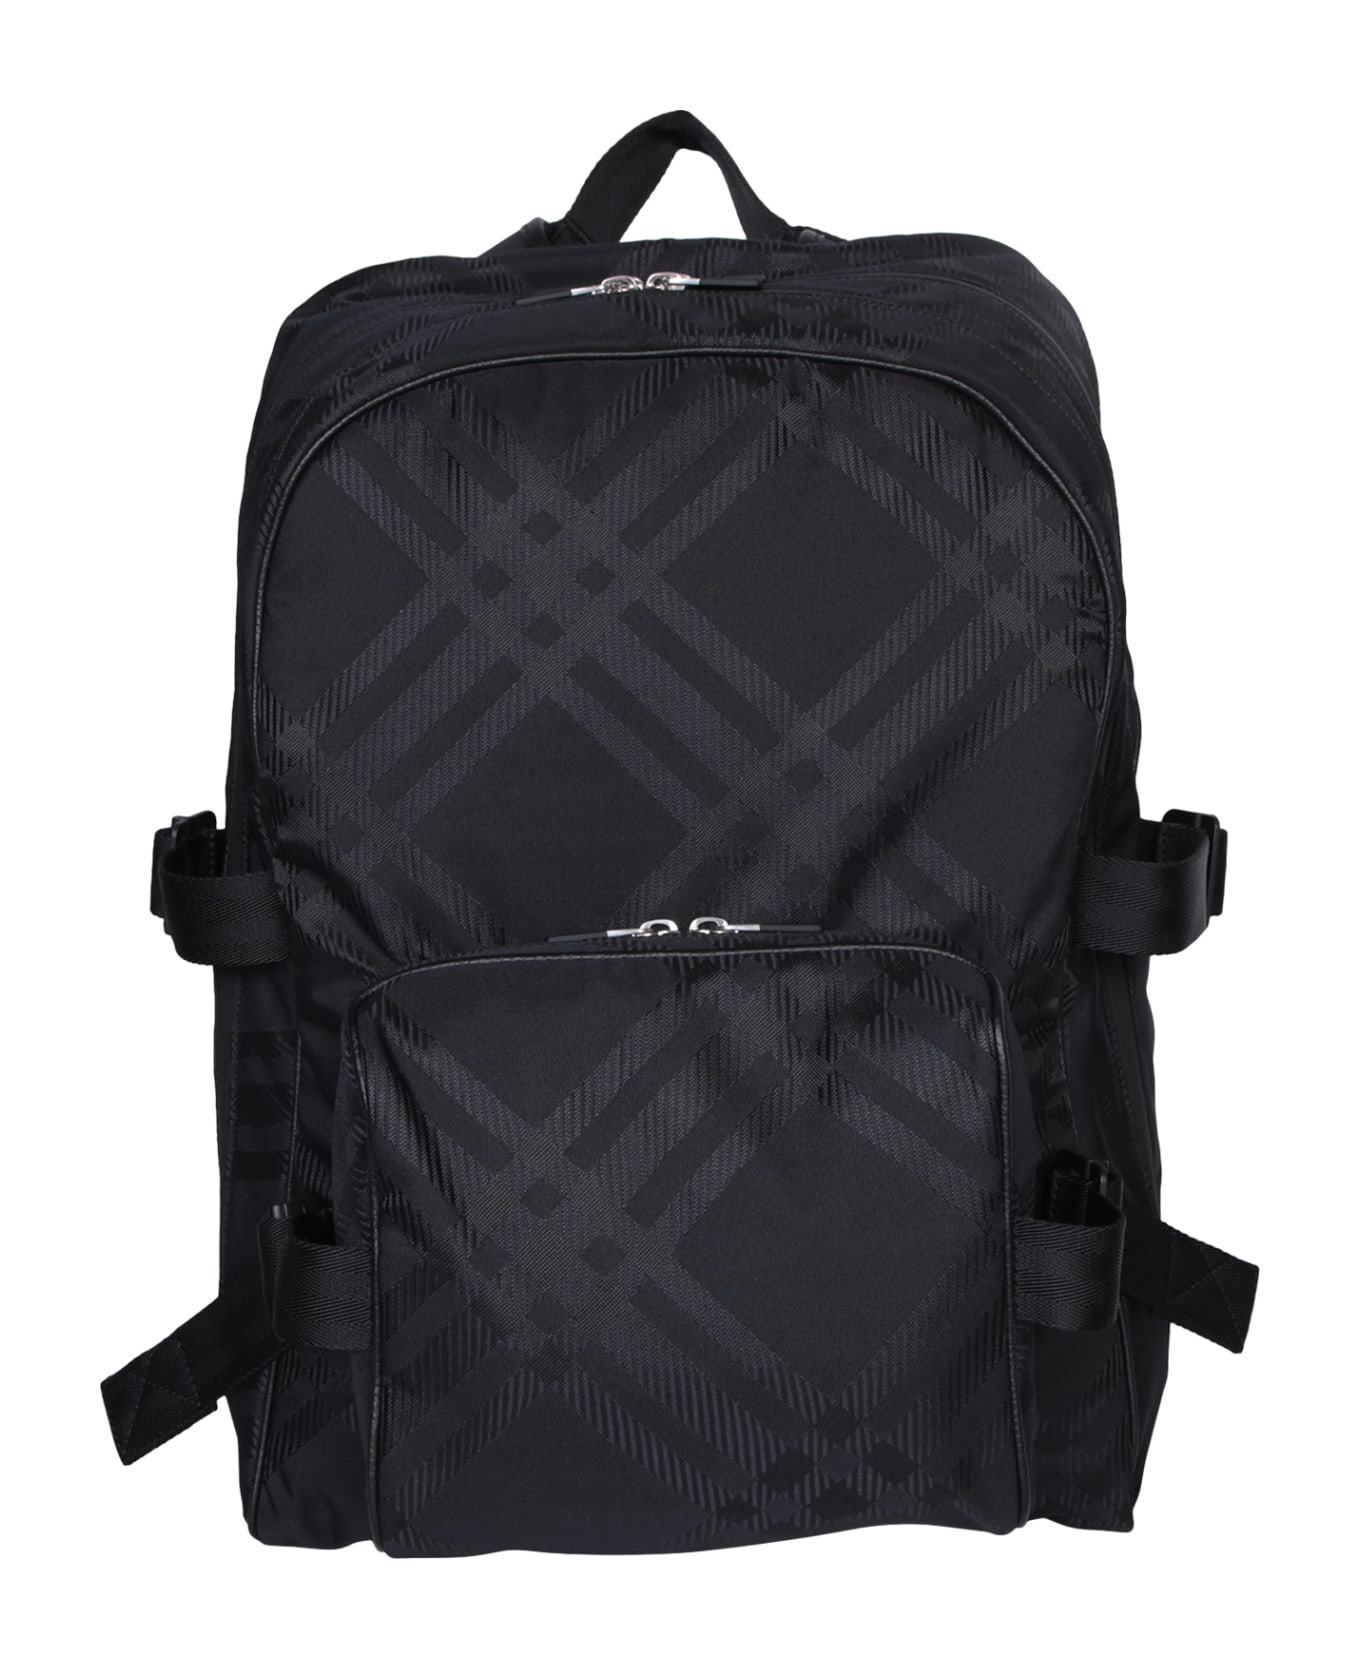 Burberry Jacquard Check Backpack - Black